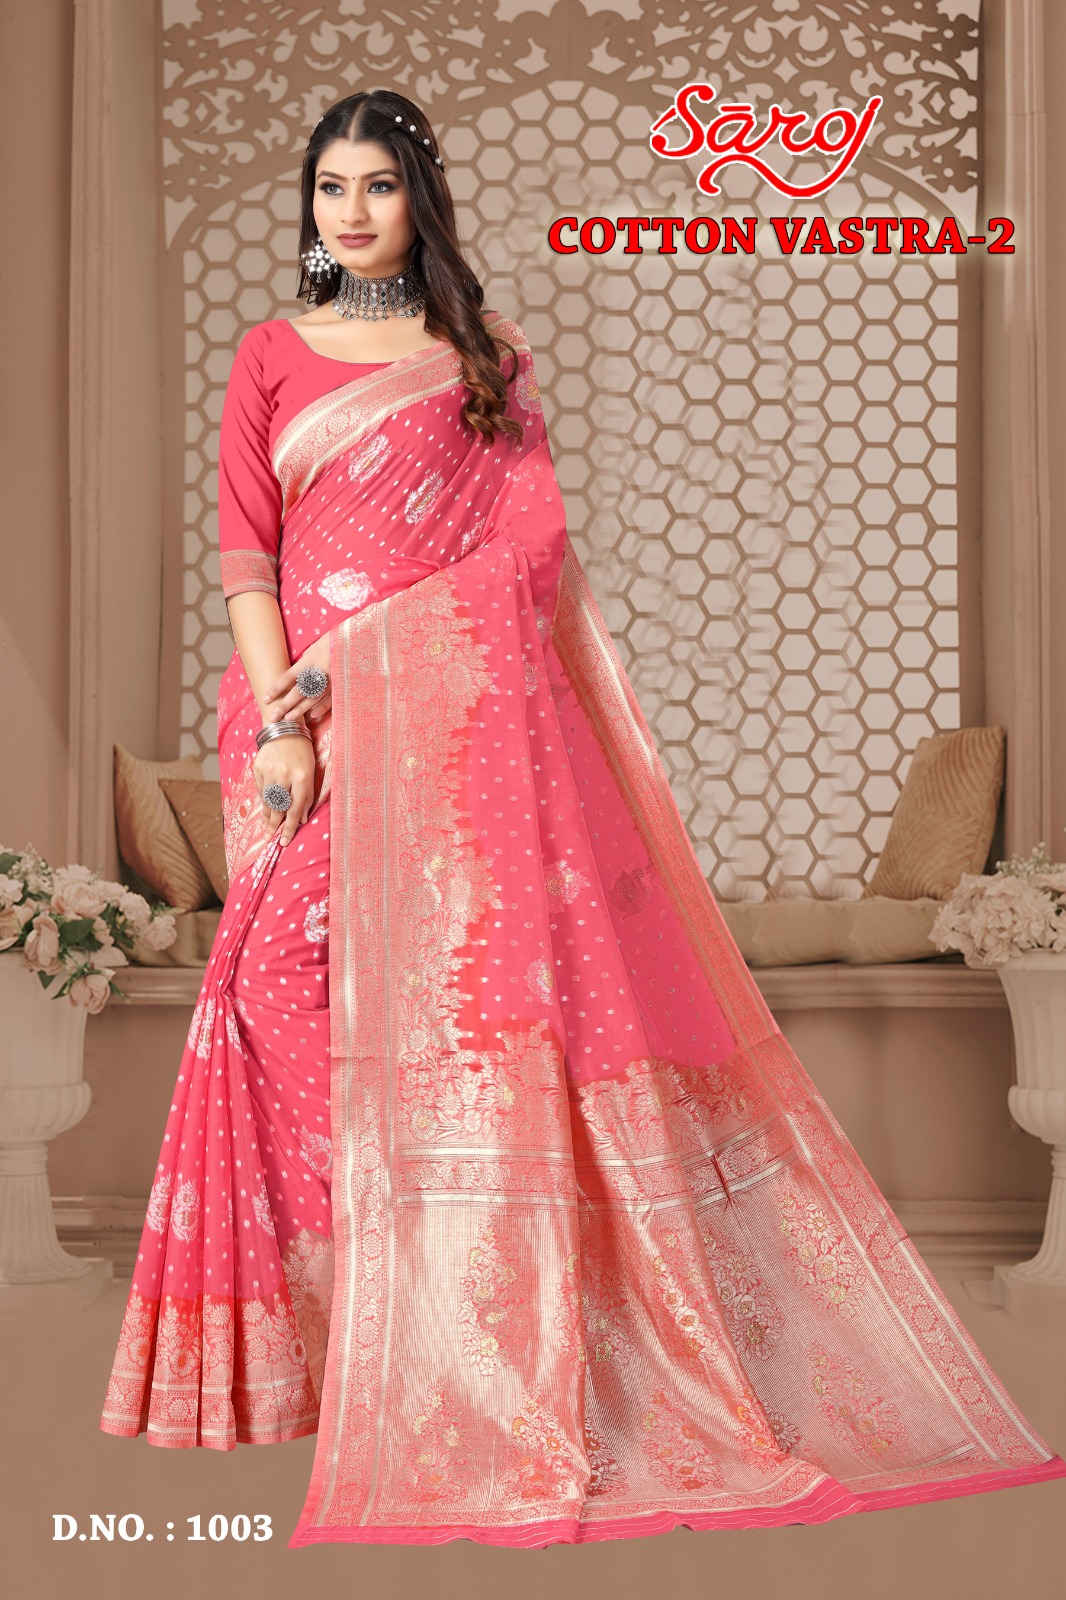 saroj saree cotton vastra 2 heavy cotton innovative look saree catalog